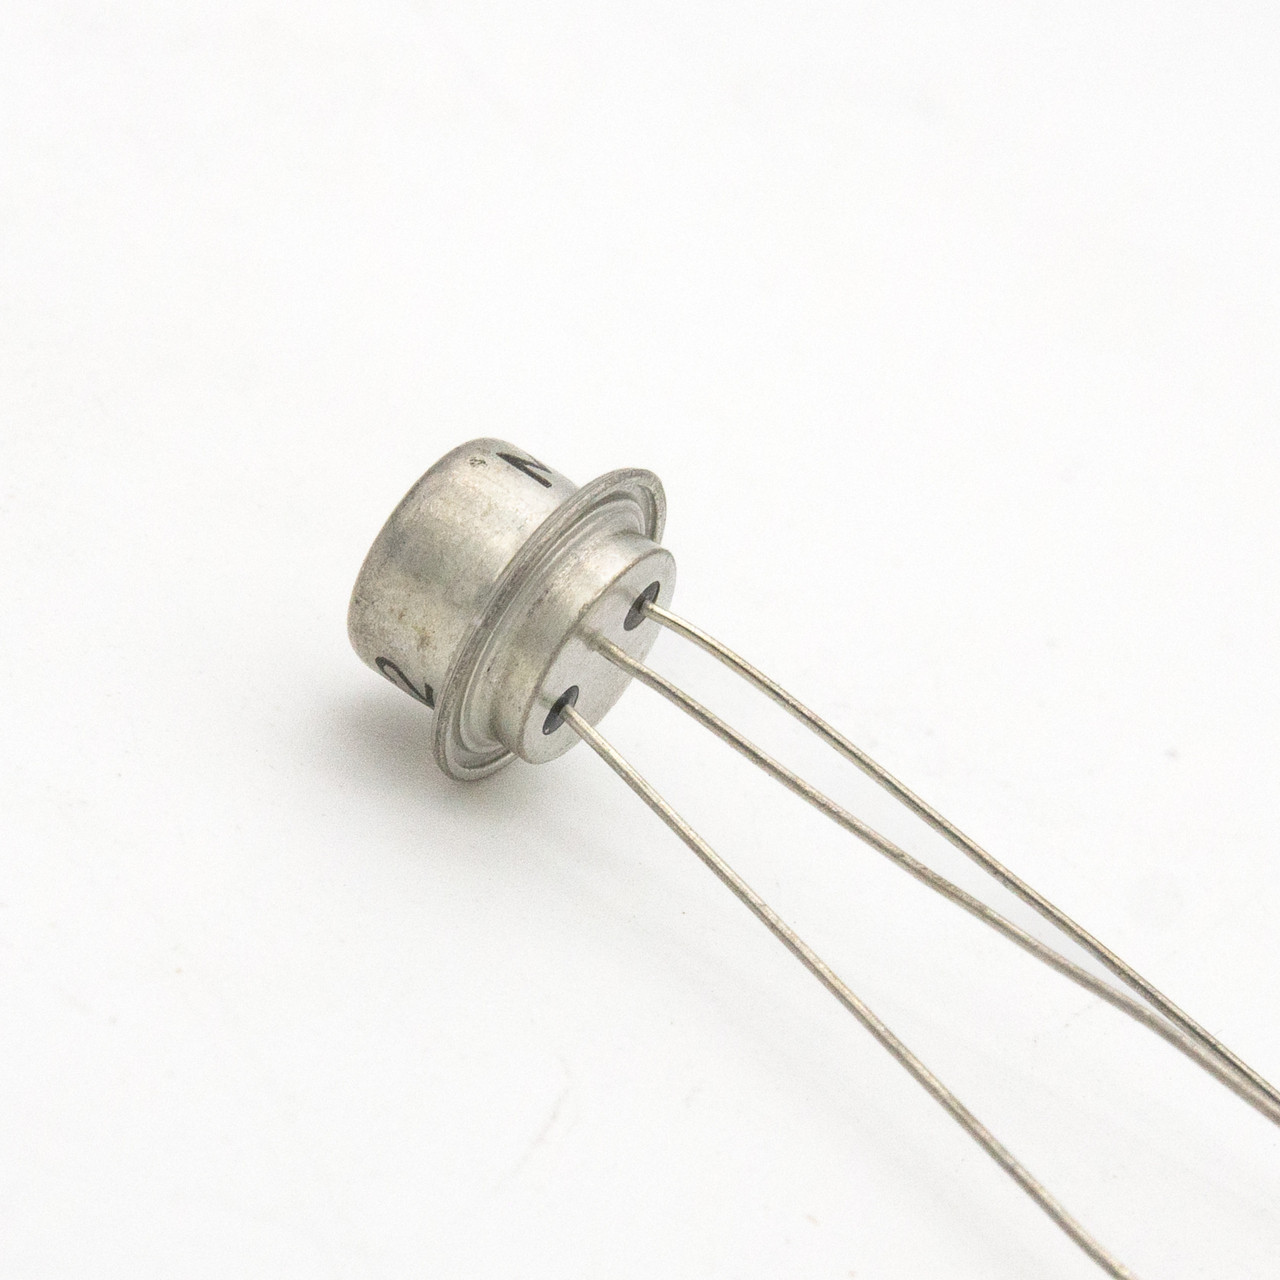 germanium transistor vs silicon transistor